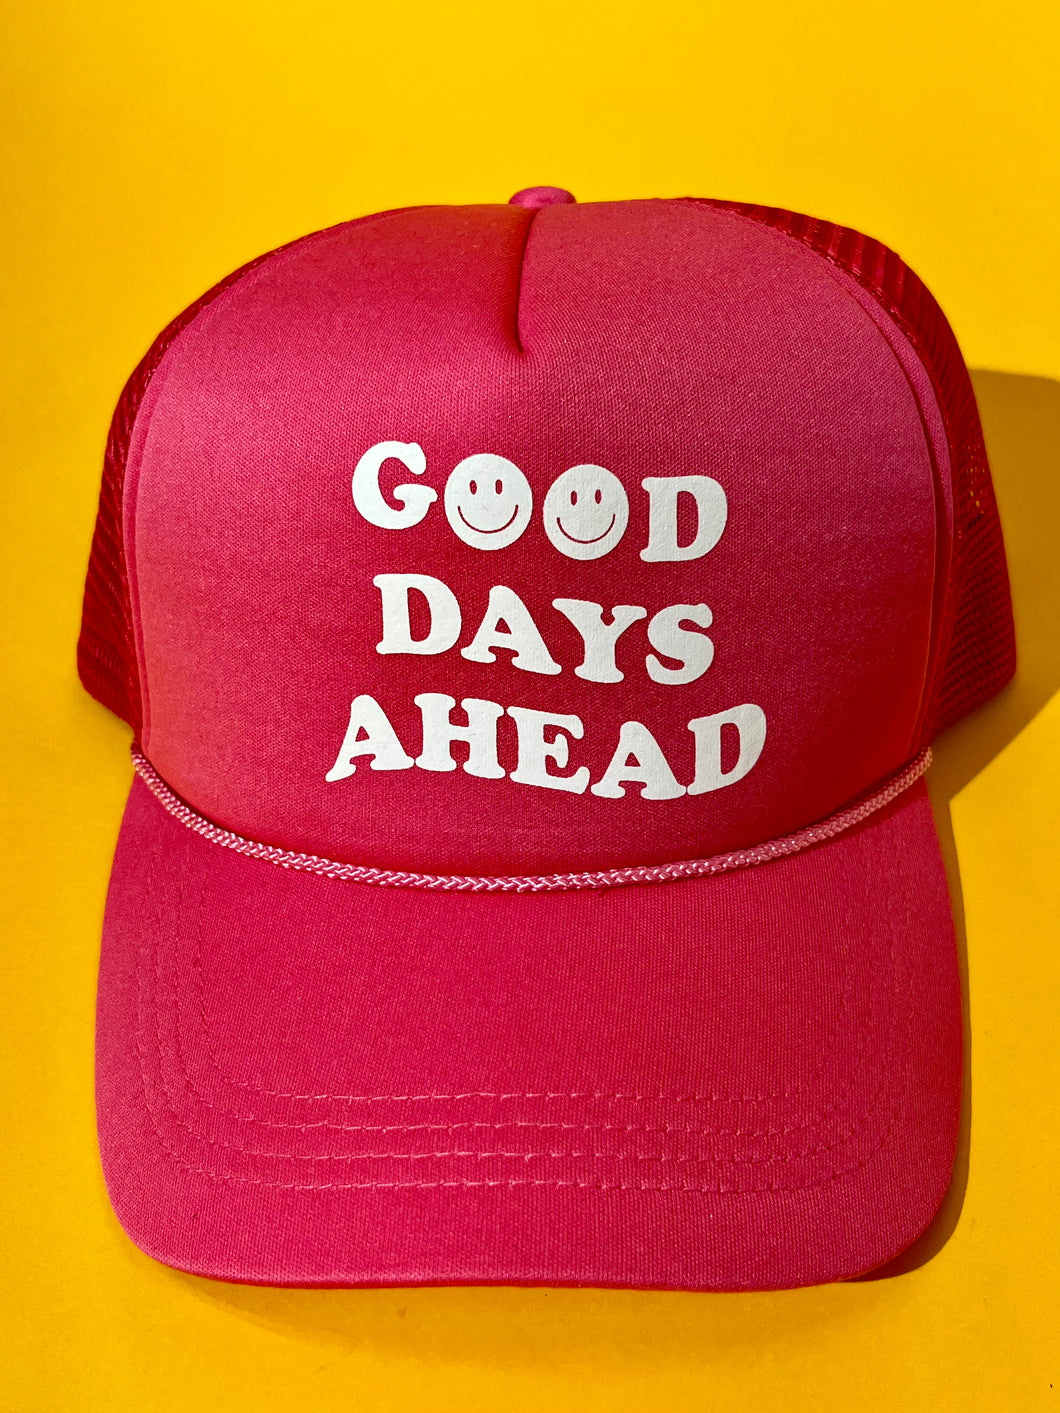 Good days ahead hot pink trucker hat